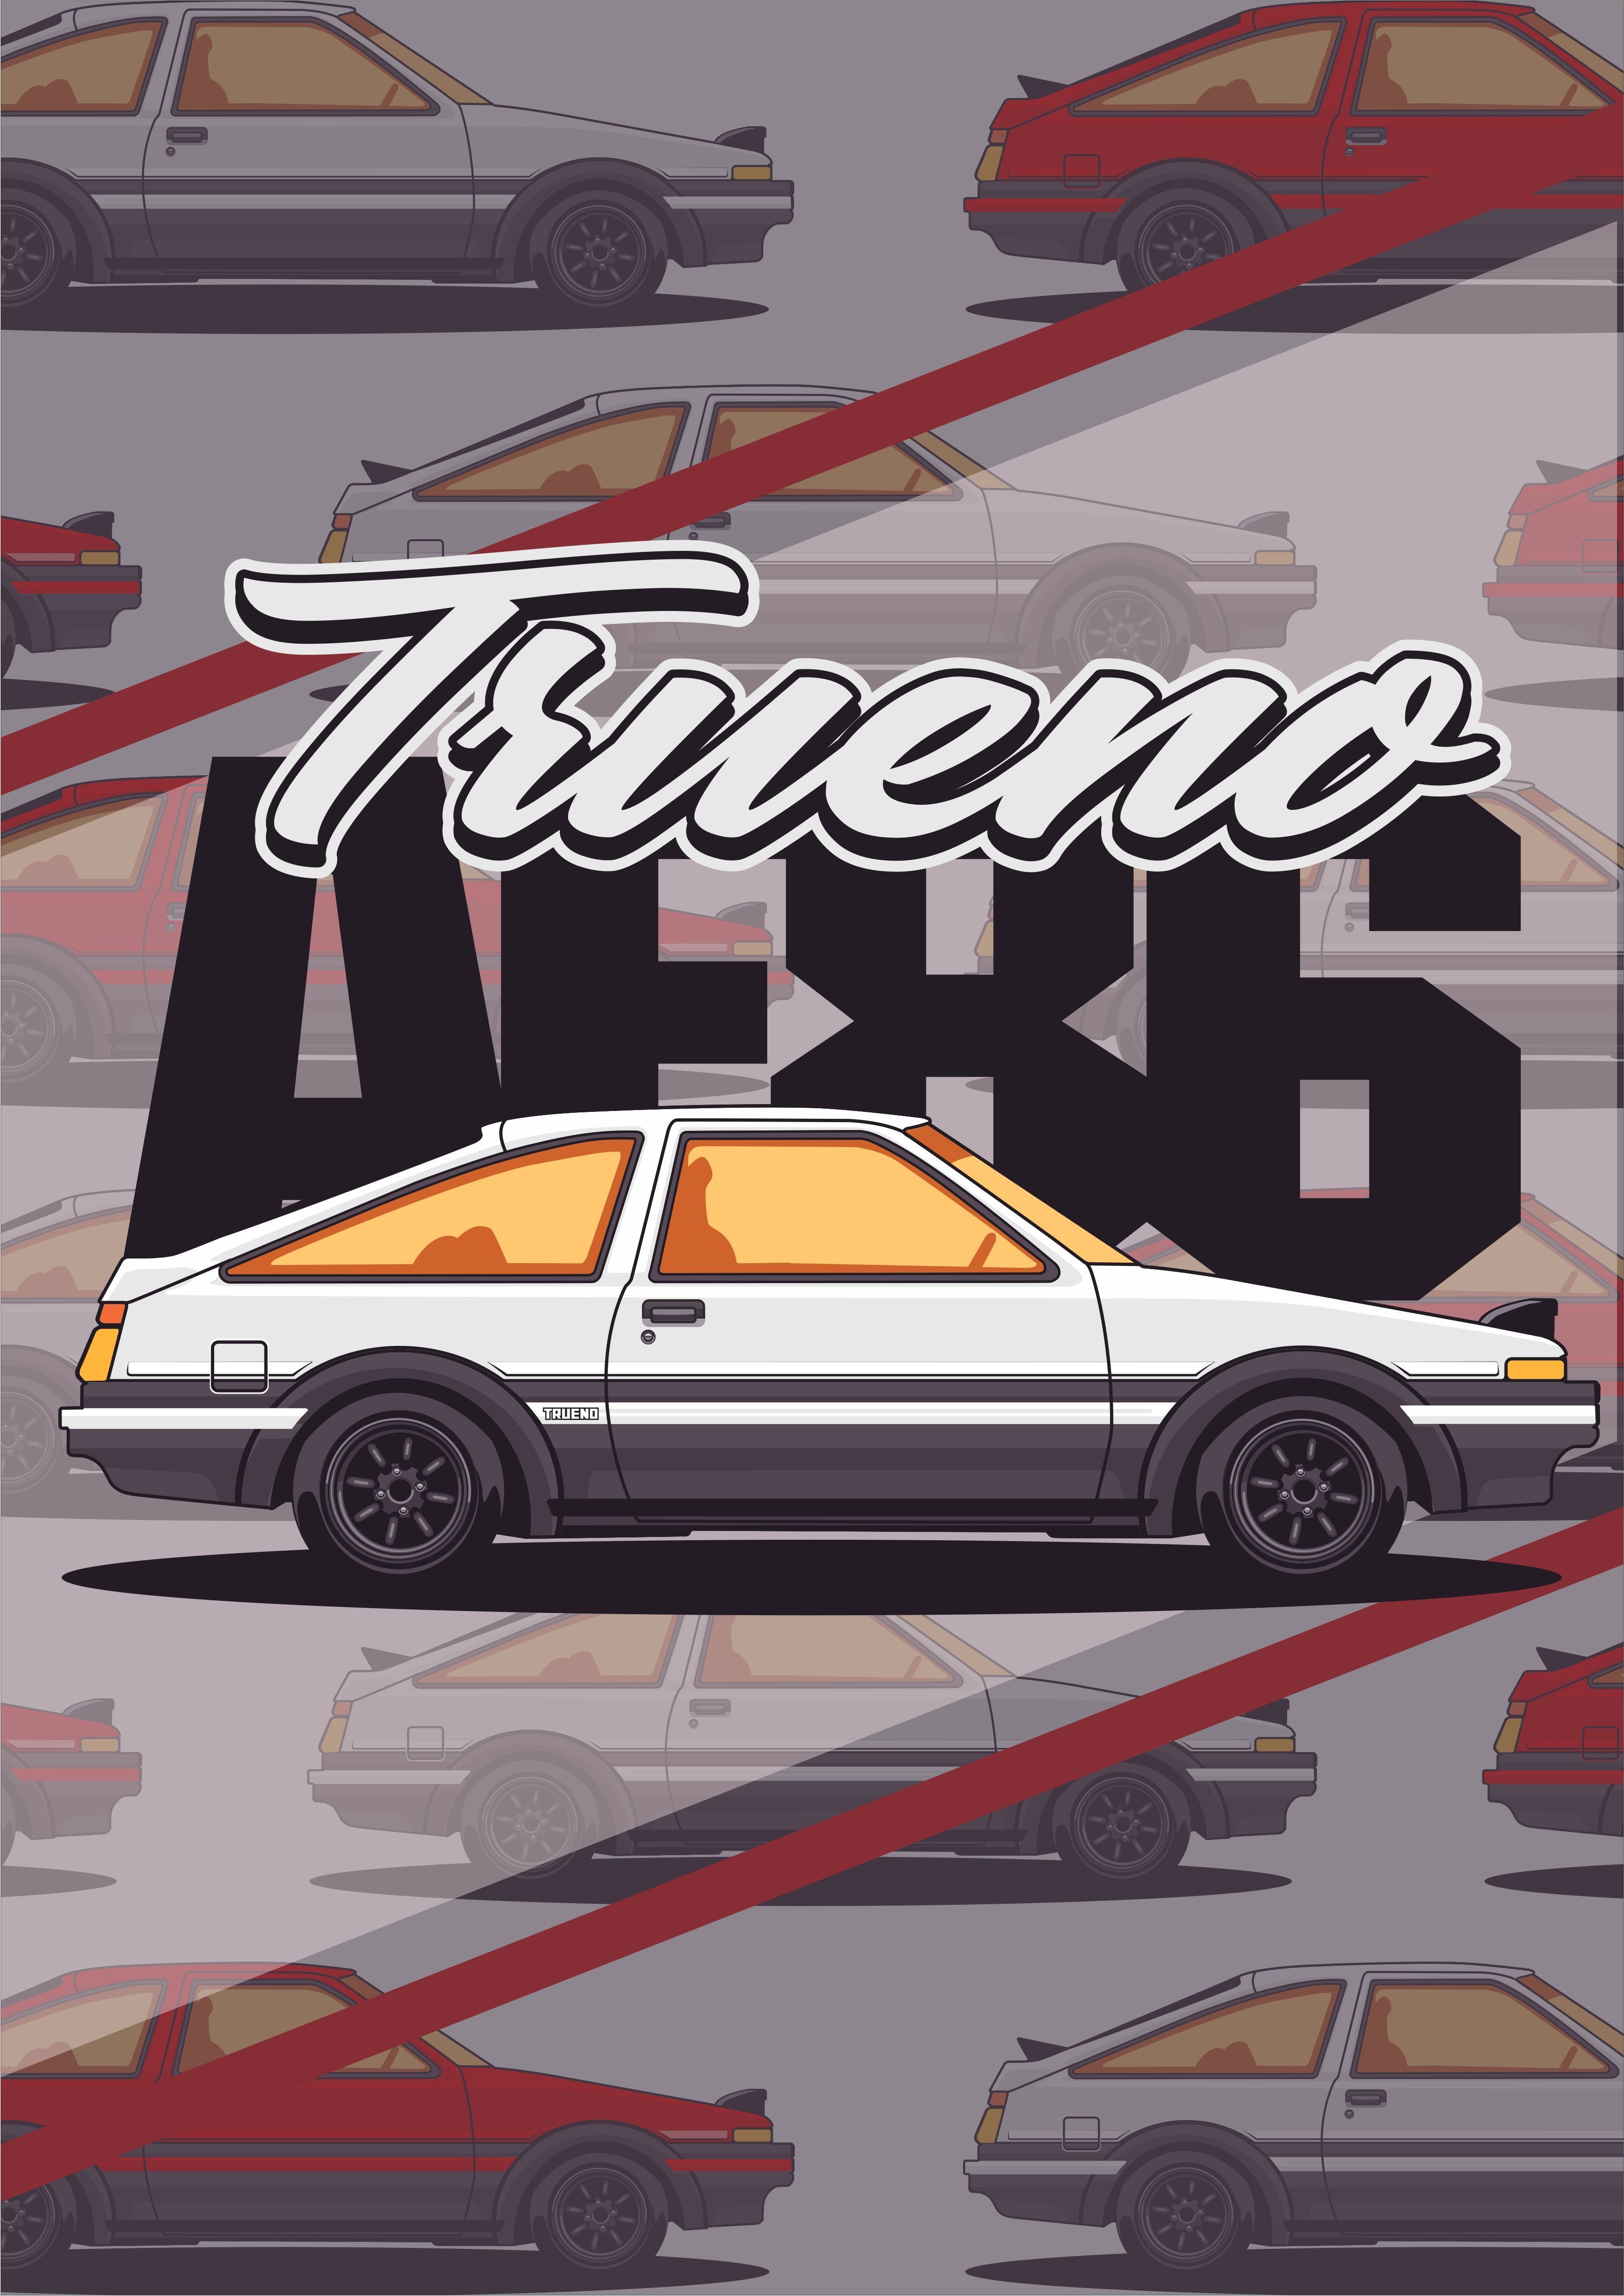 AE86 Trueno poster. Best jdm cars, Ae Jdm wallpaper